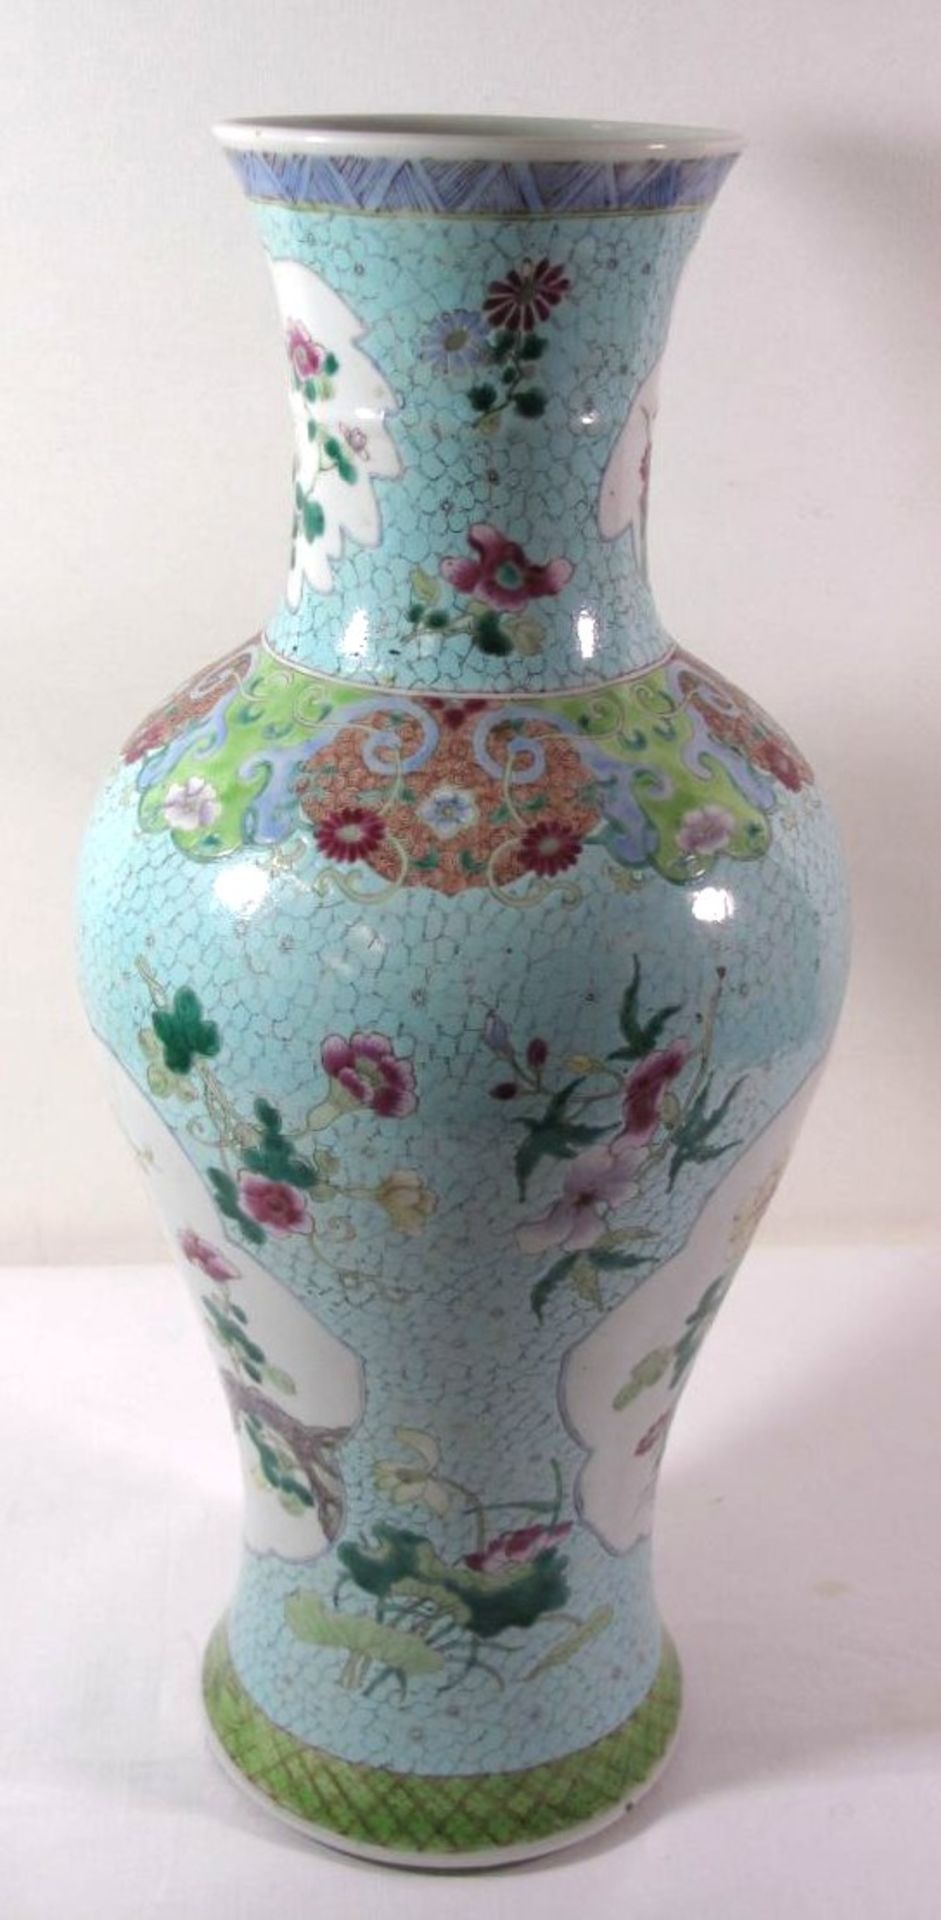 hohe Vase, China, aufwendig dekoriert, Kirschblüten, wohl Anf. 19. Jhd., Altris am Vasenhals, - Bild 4 aus 9